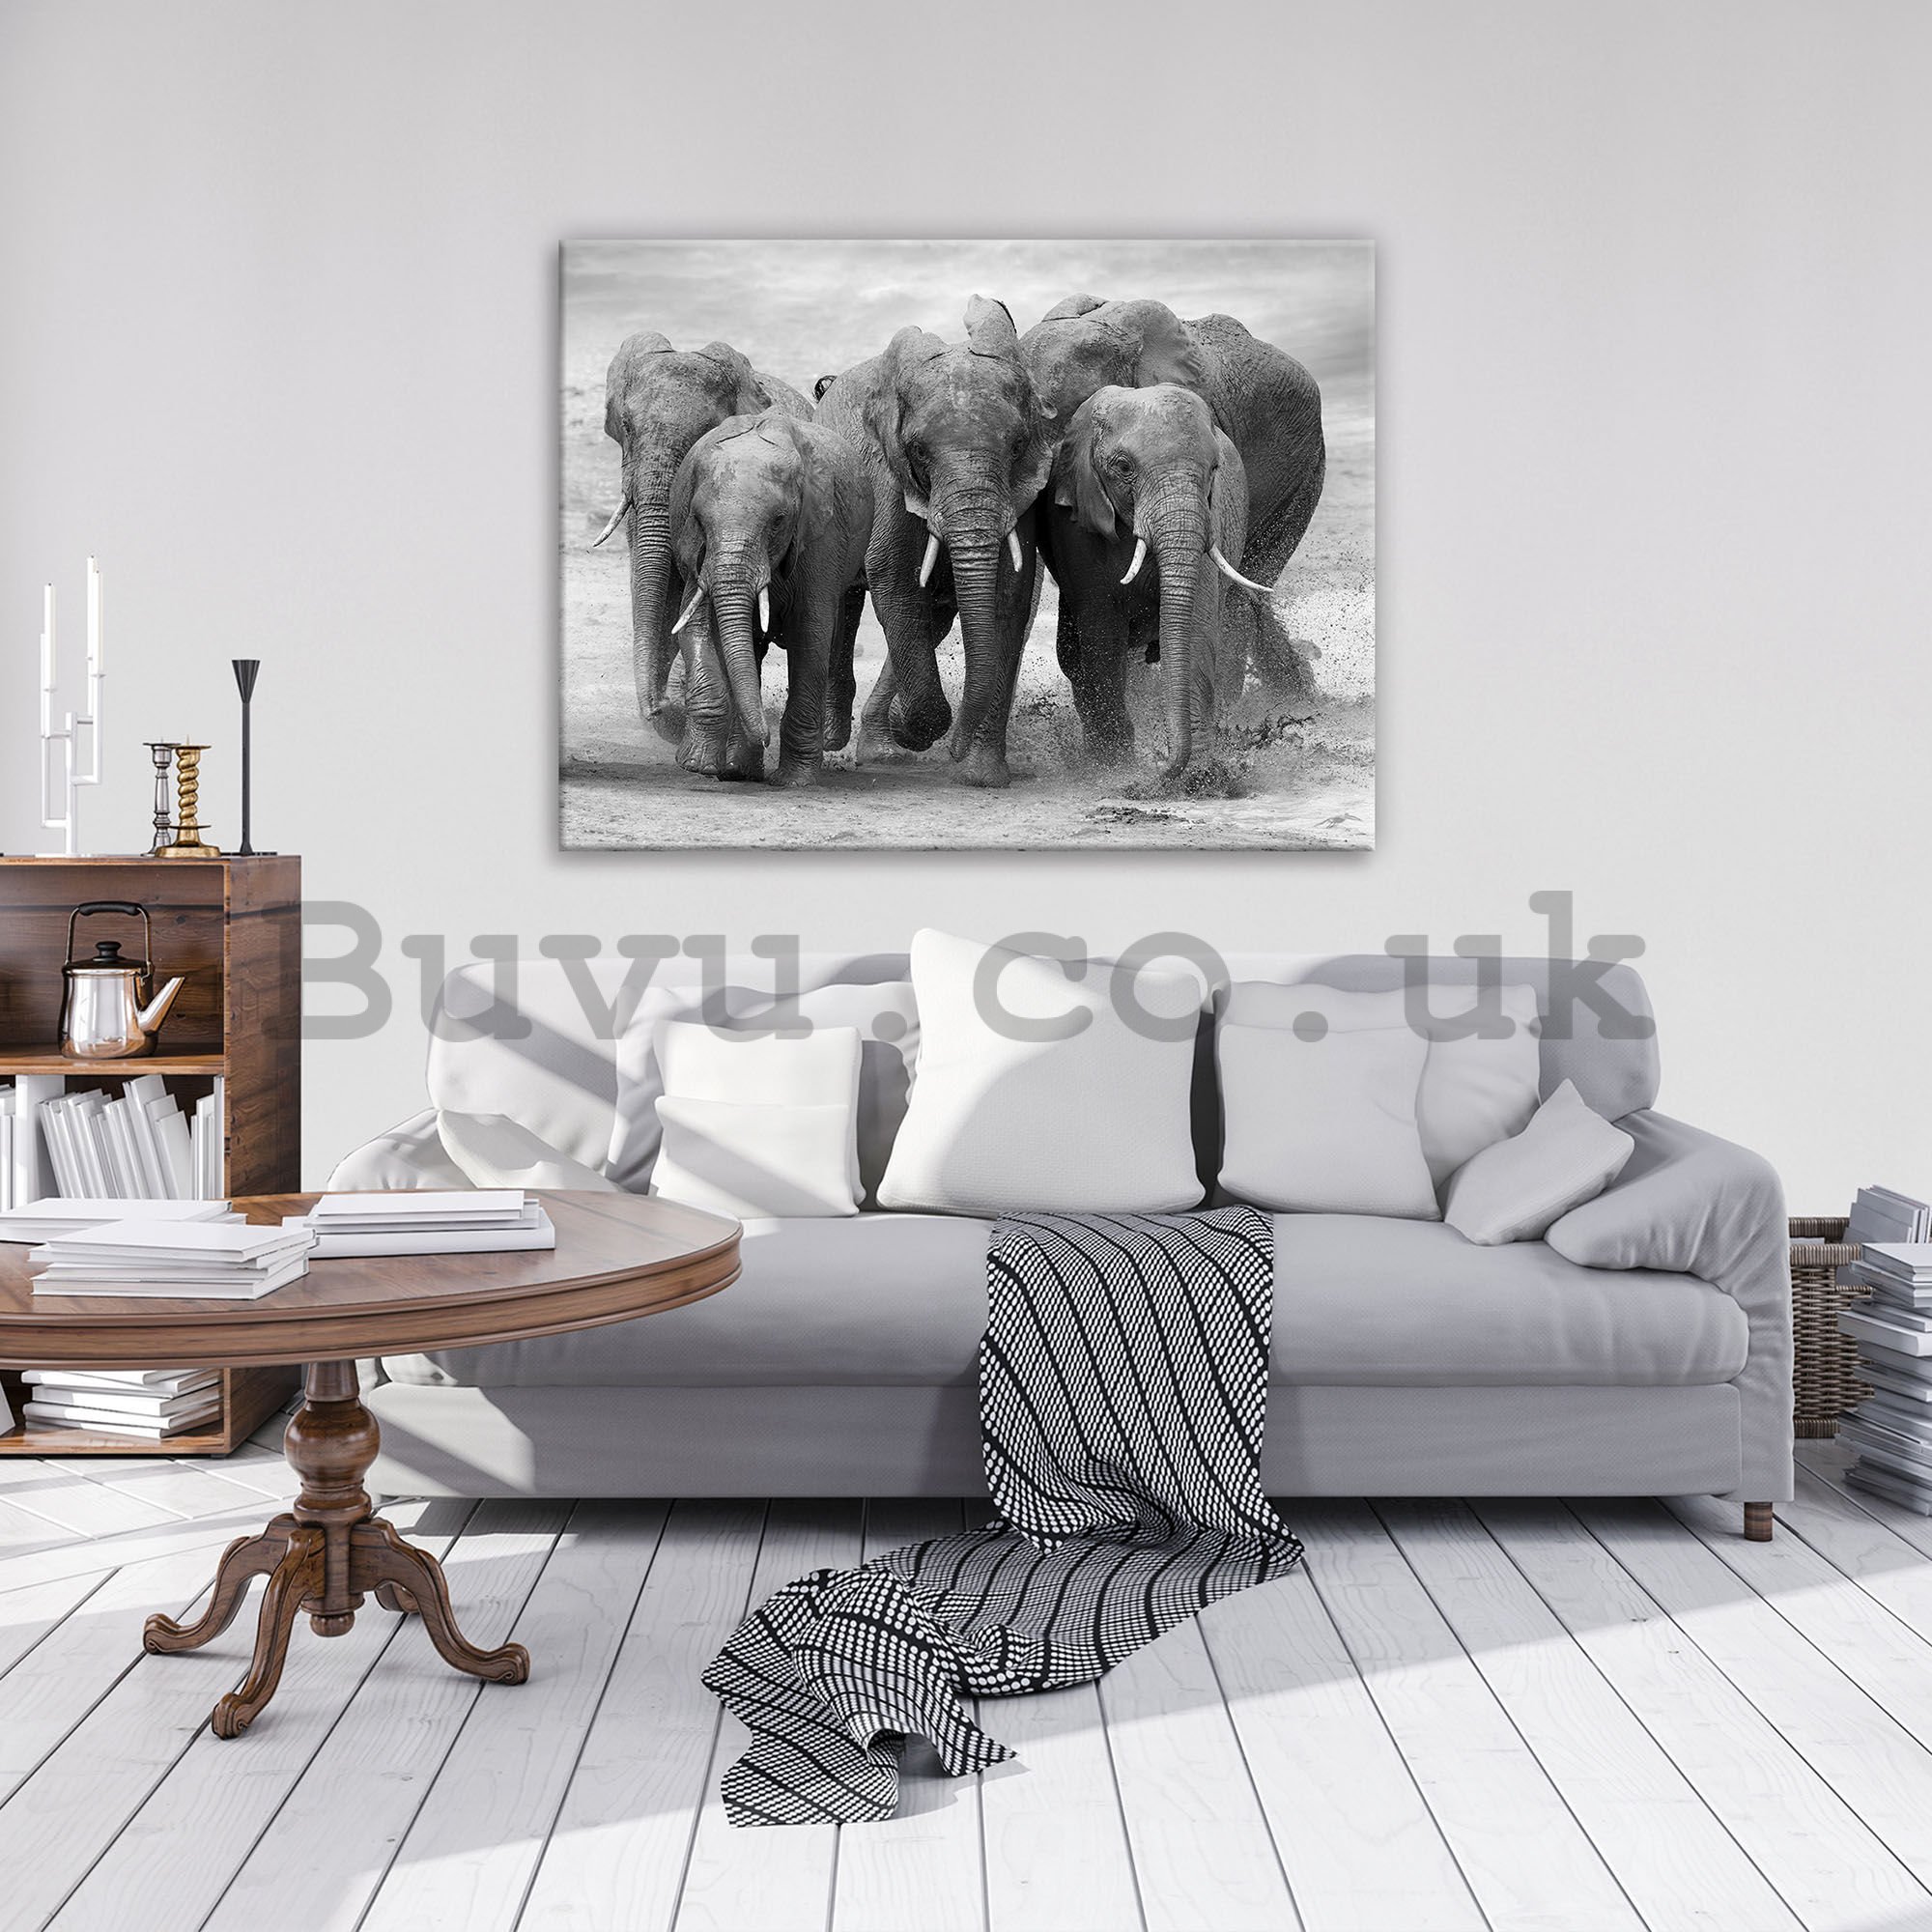 Painting on canvas: Elephants - 80x60 cm